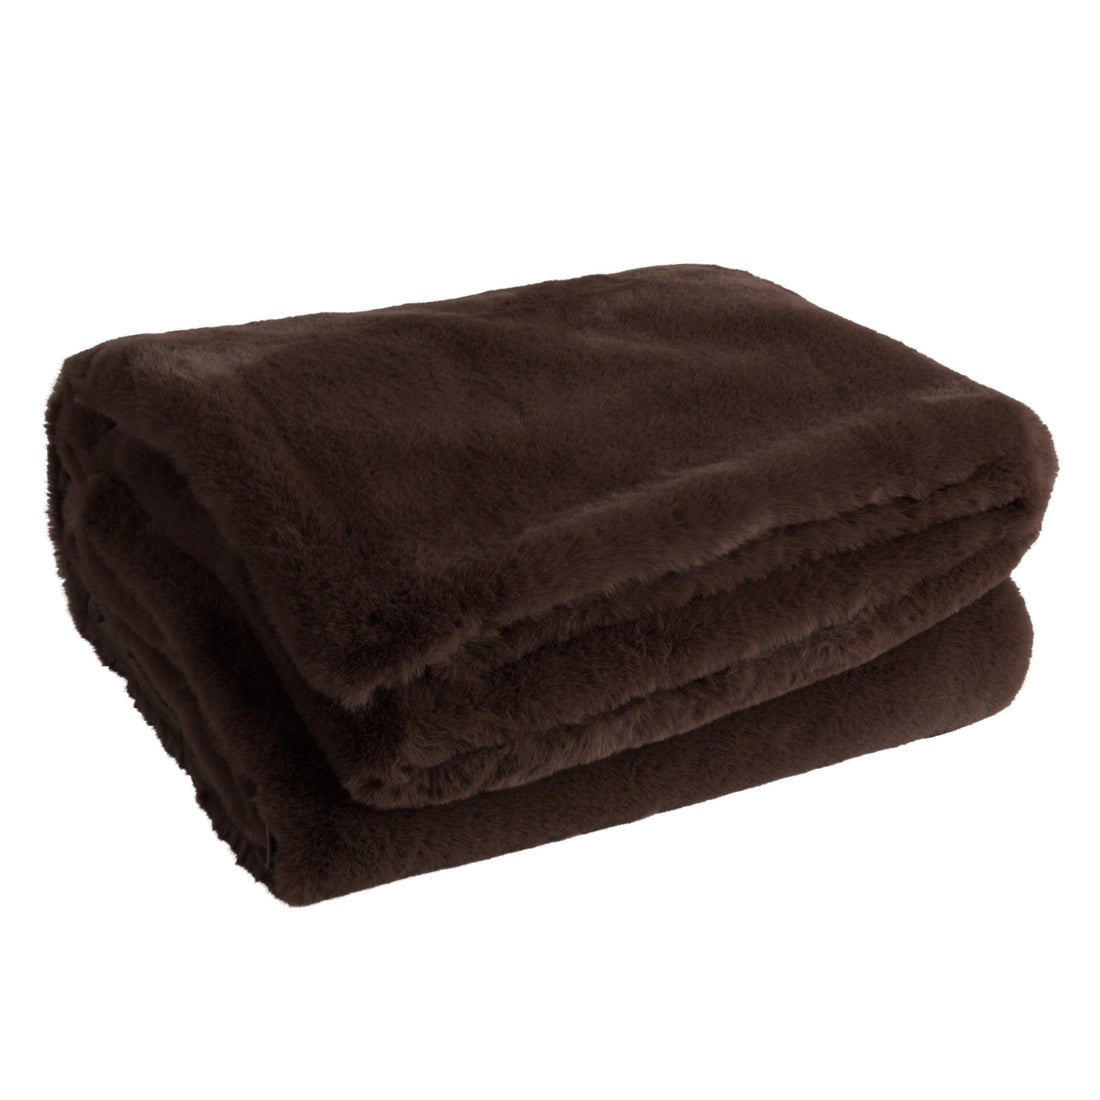 Luxe Blanket - Dark Brown (50 x 70 CM)